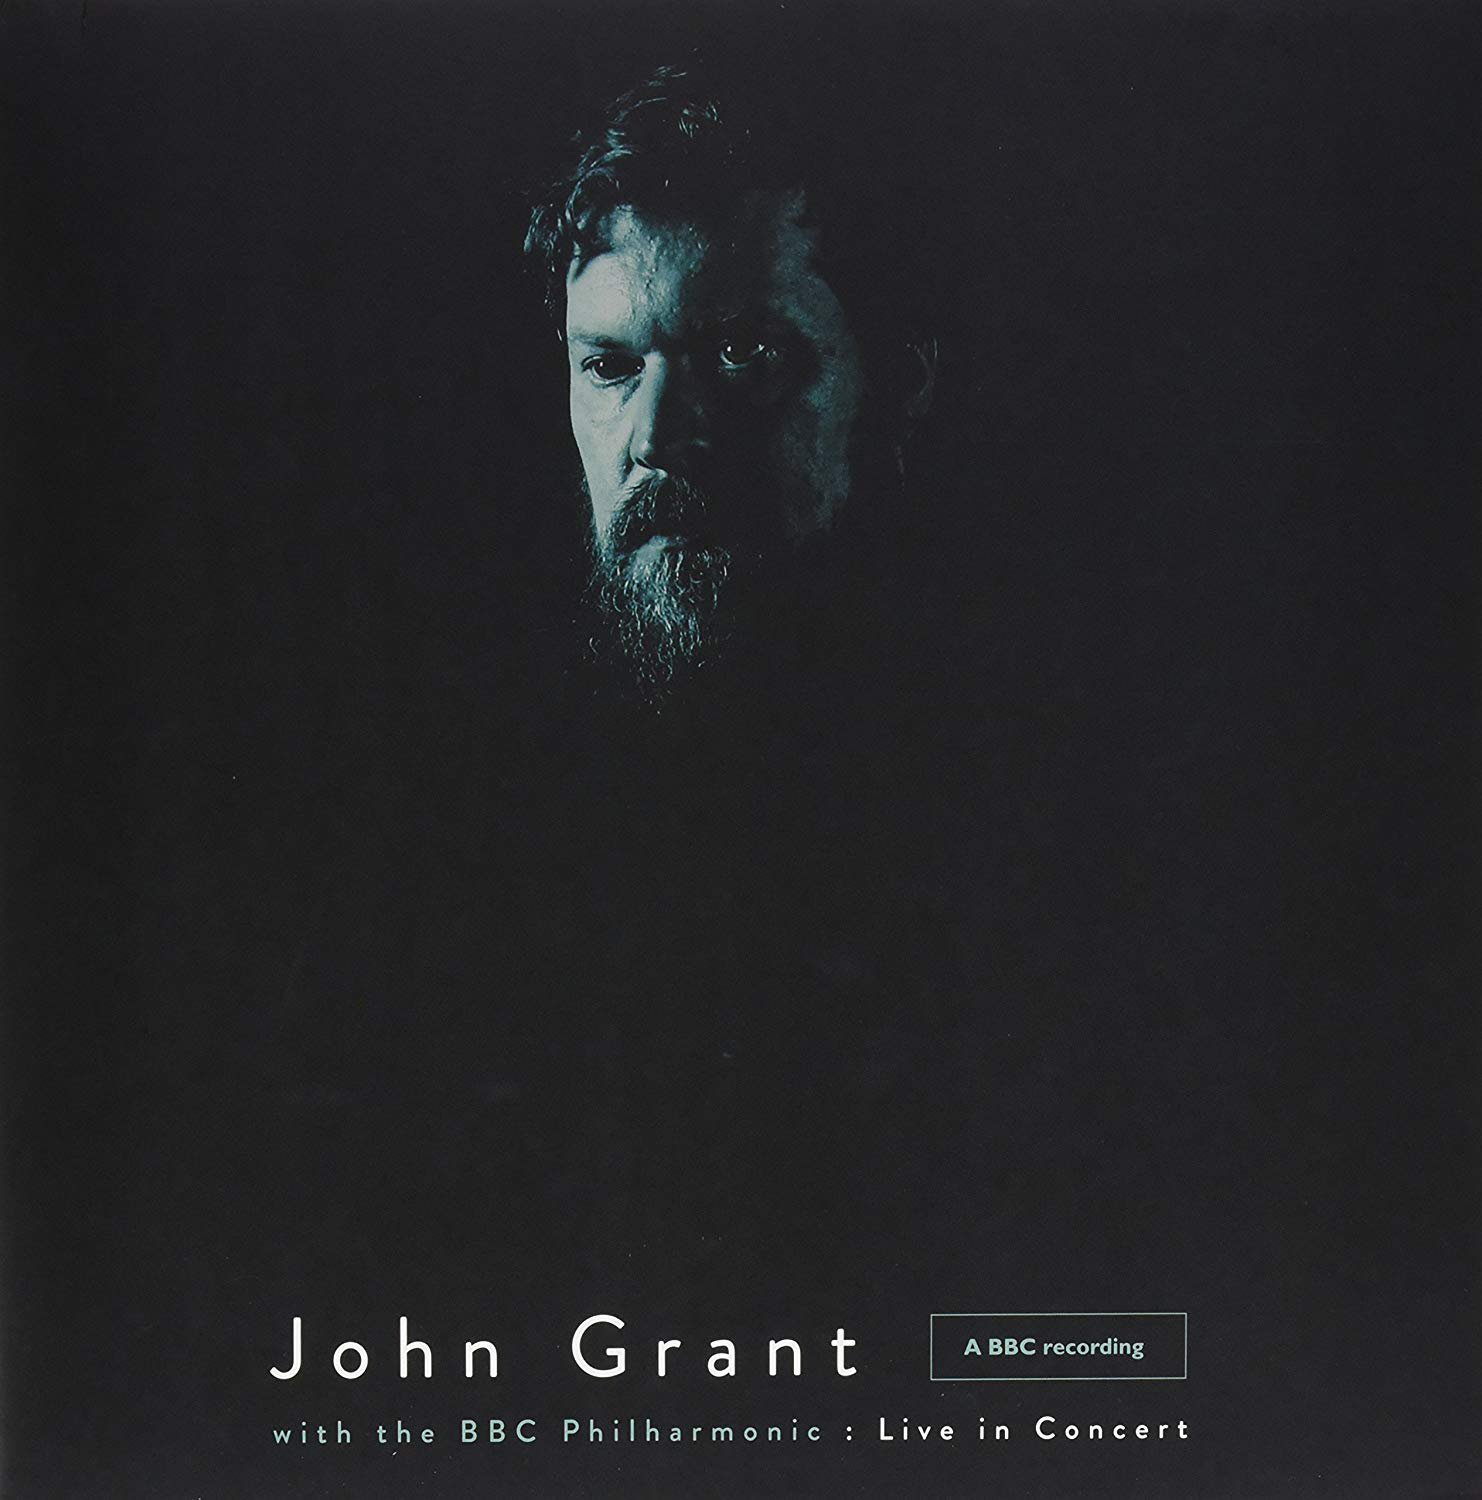 John Grant "with the BBC Philharmonic" LP